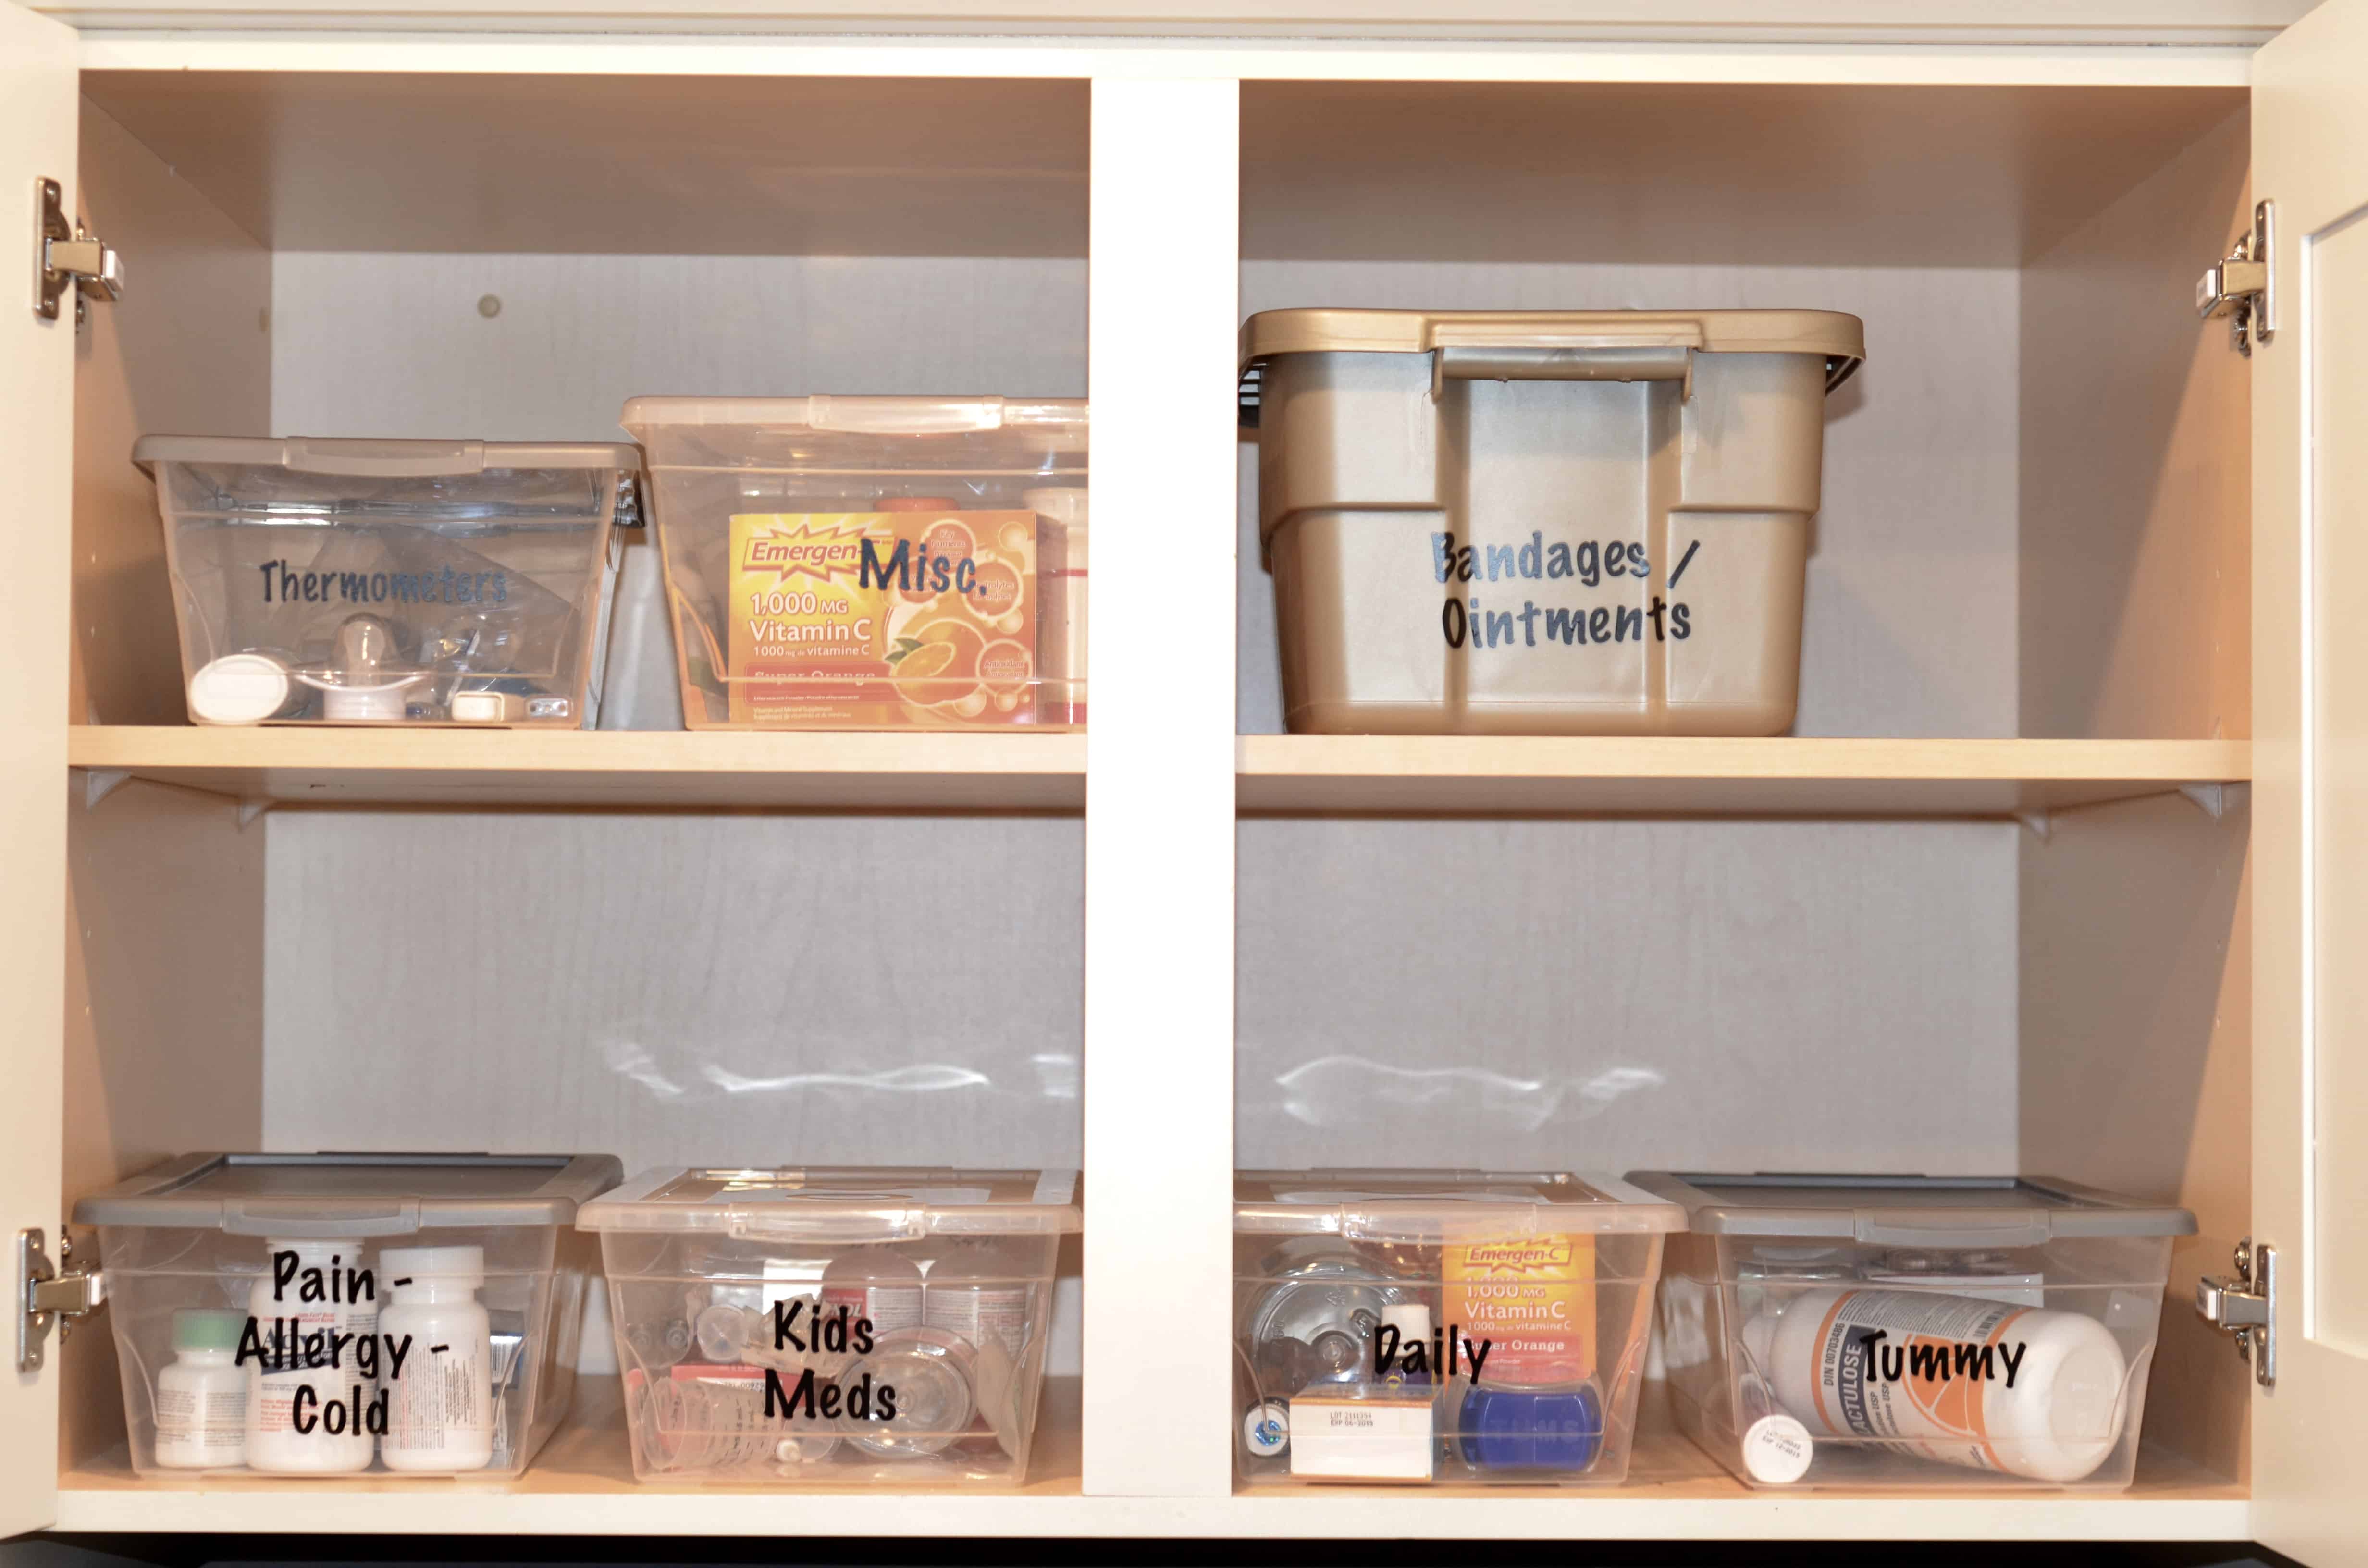 Medicine Cabinet Organization - My Mess Organized